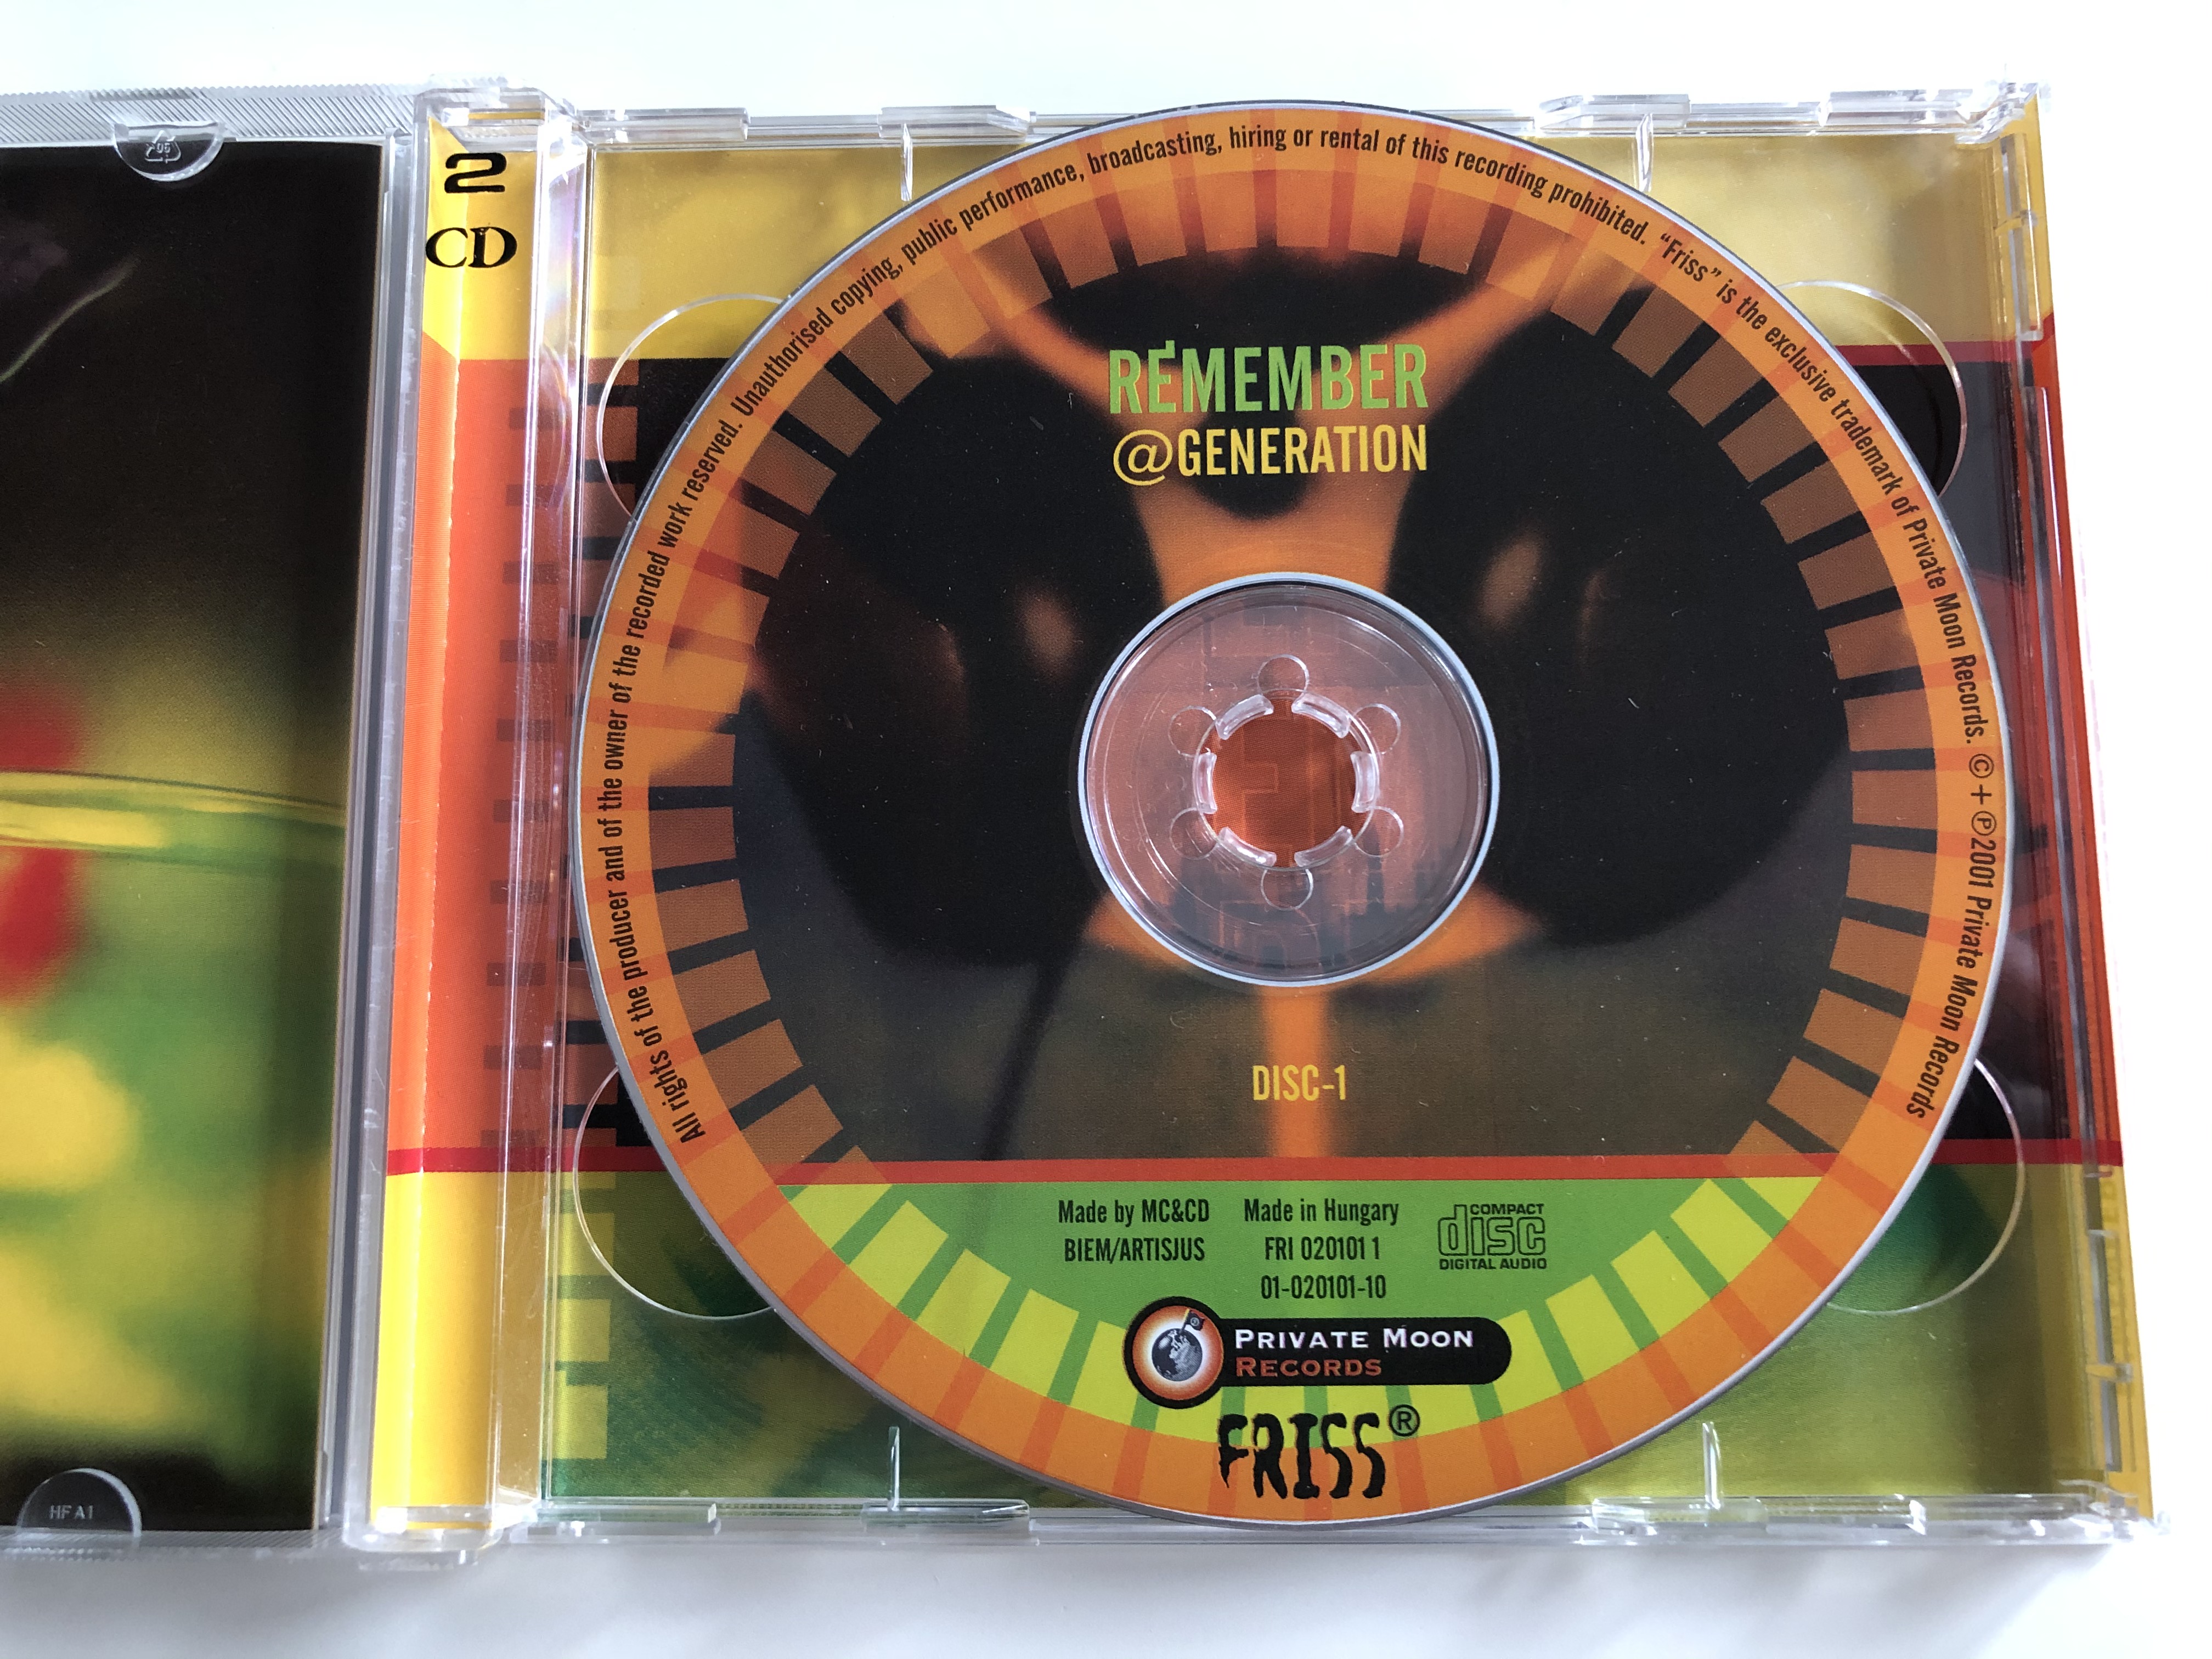 r-member-generation-friss-2x-audio-cd-2001-fri-020101-1-6-.jpg